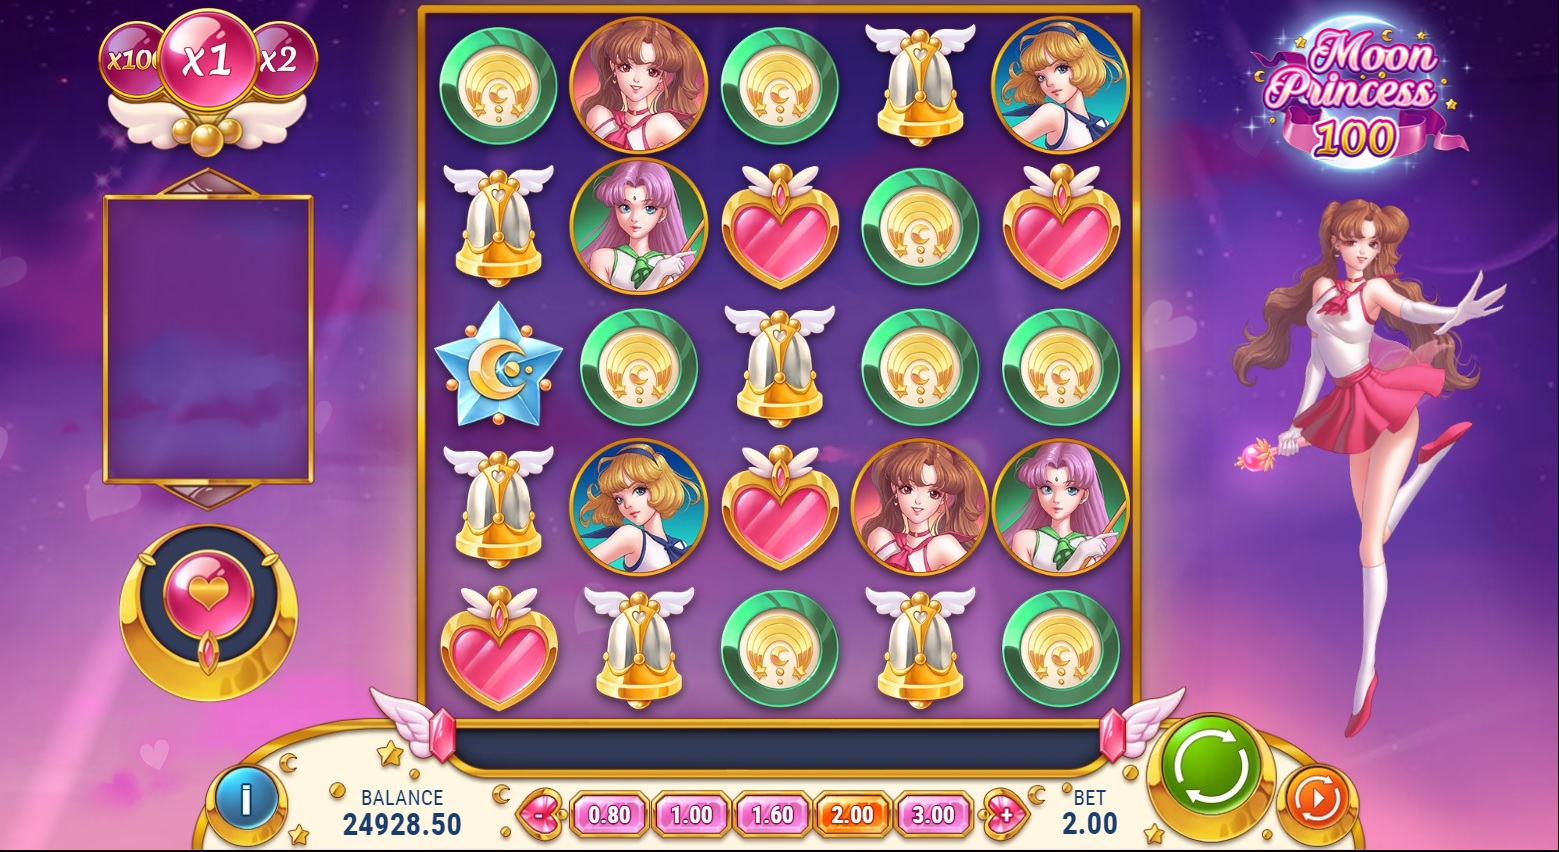 Moon Princess 100 slot, base game